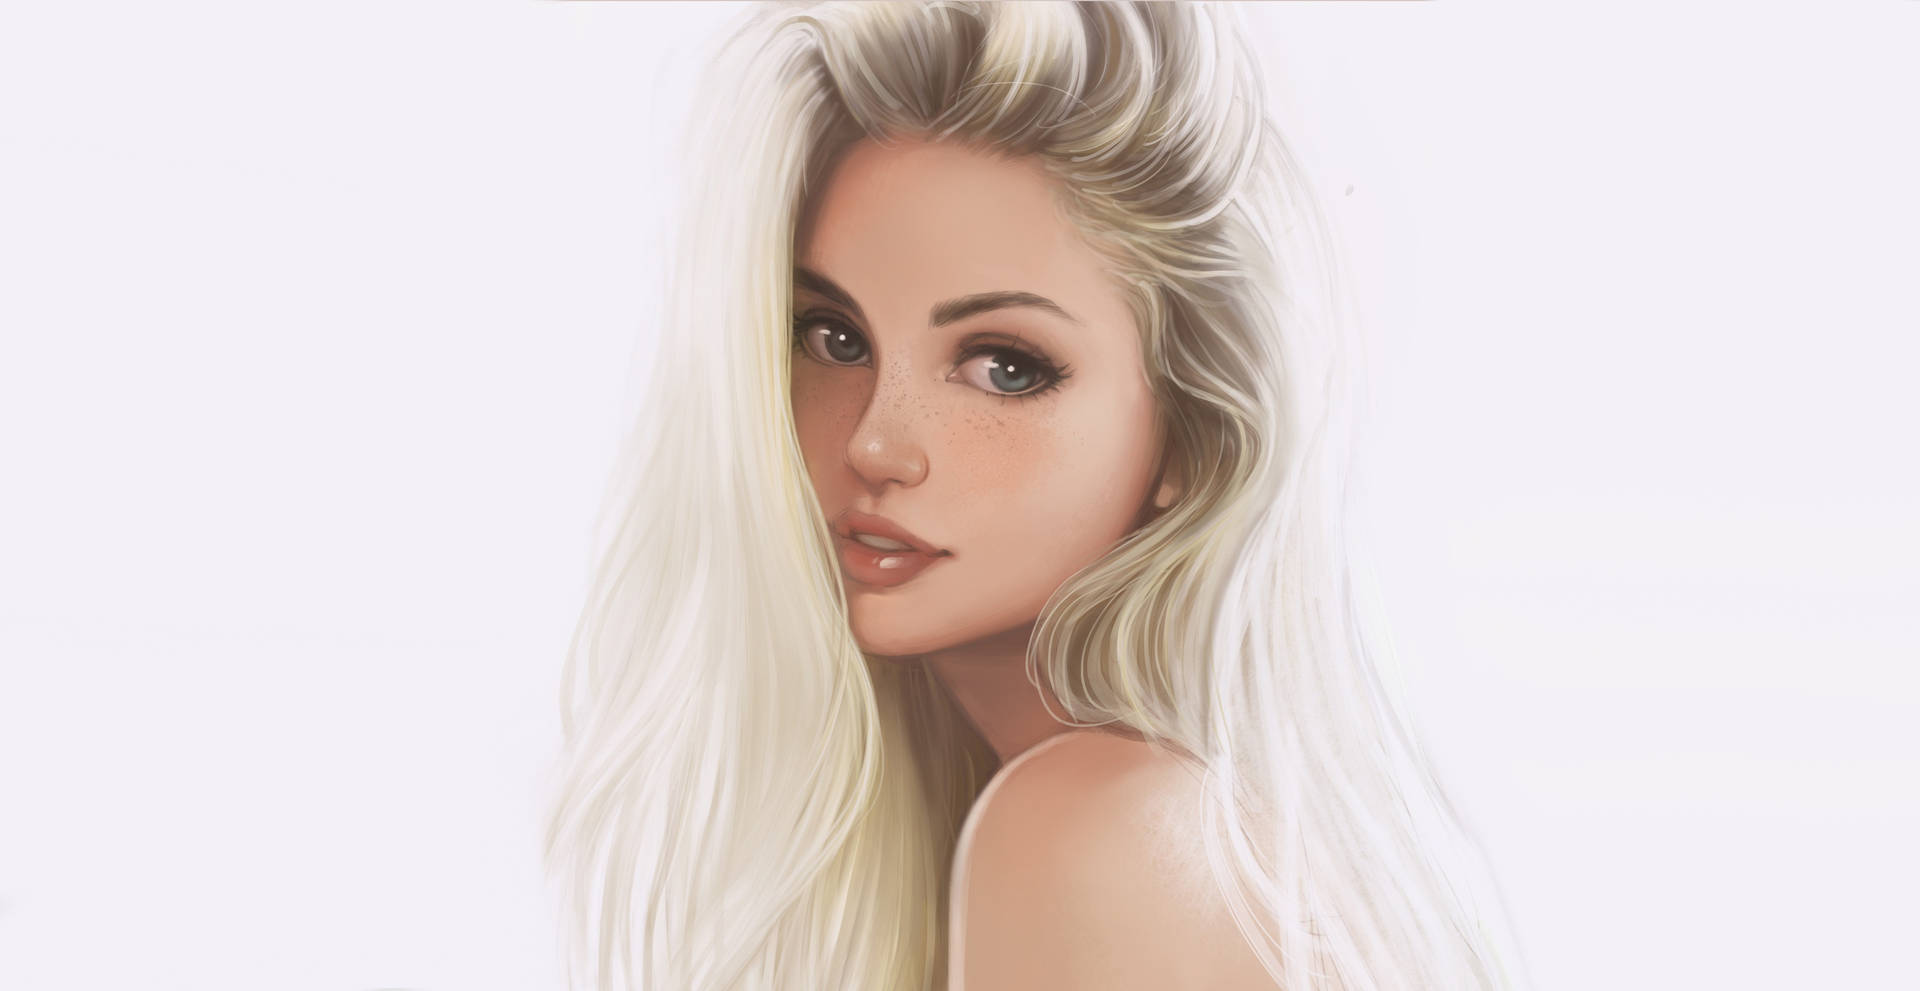 Blonde Woman Digital Art Wallpaper